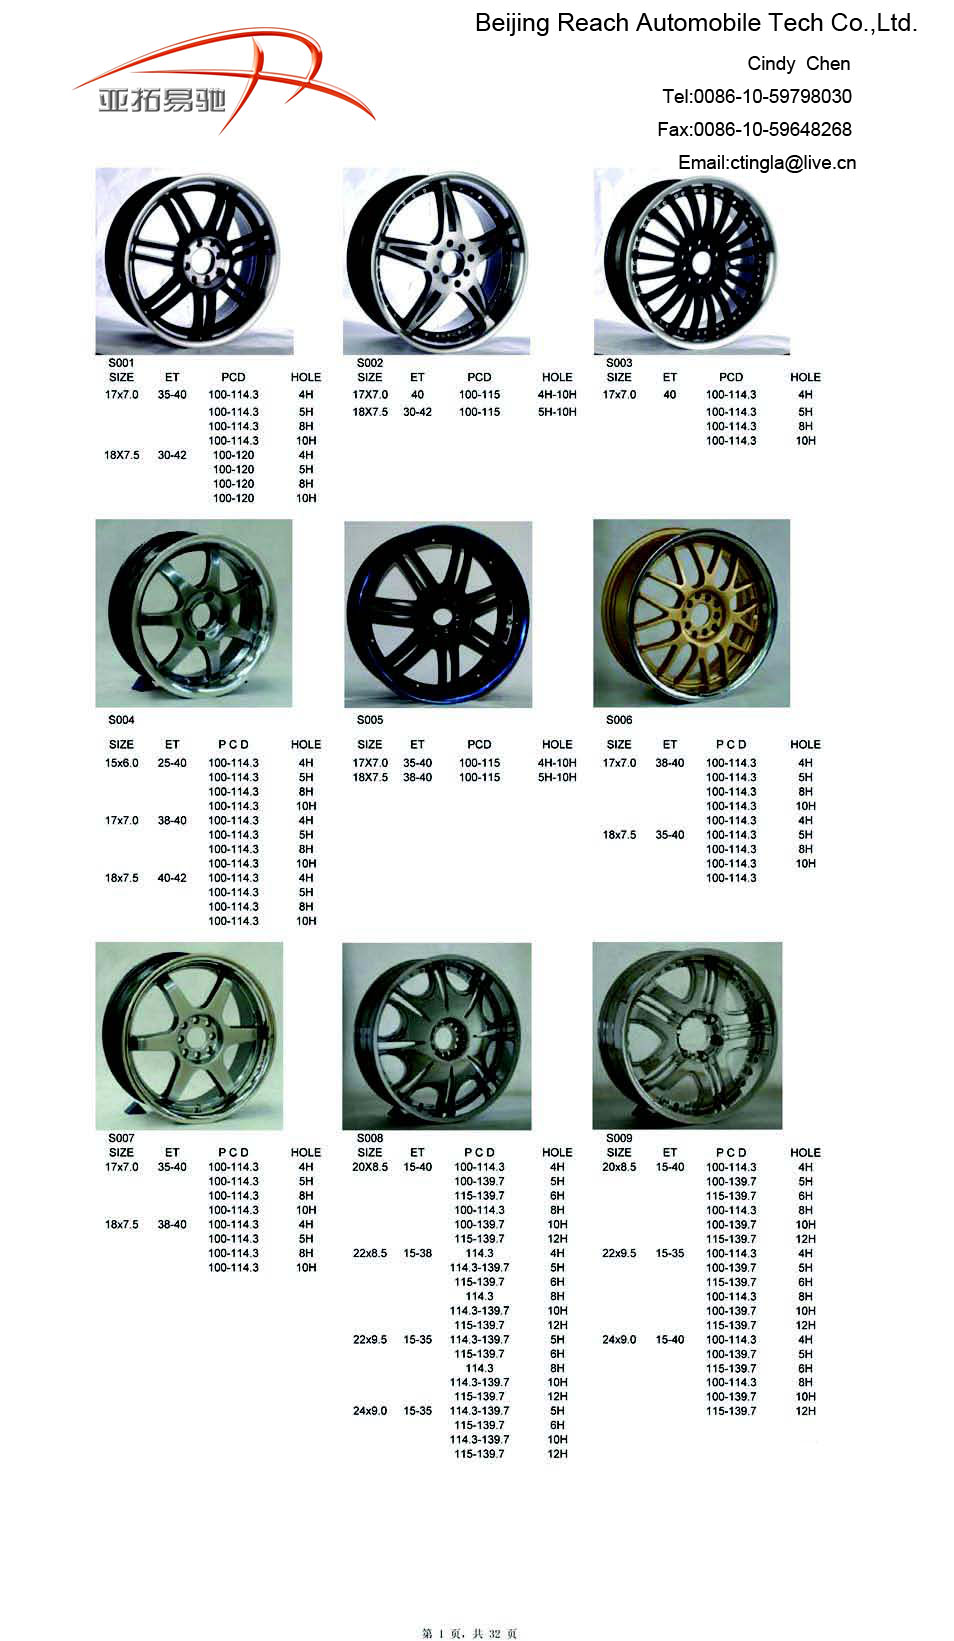 alloy wheel rim